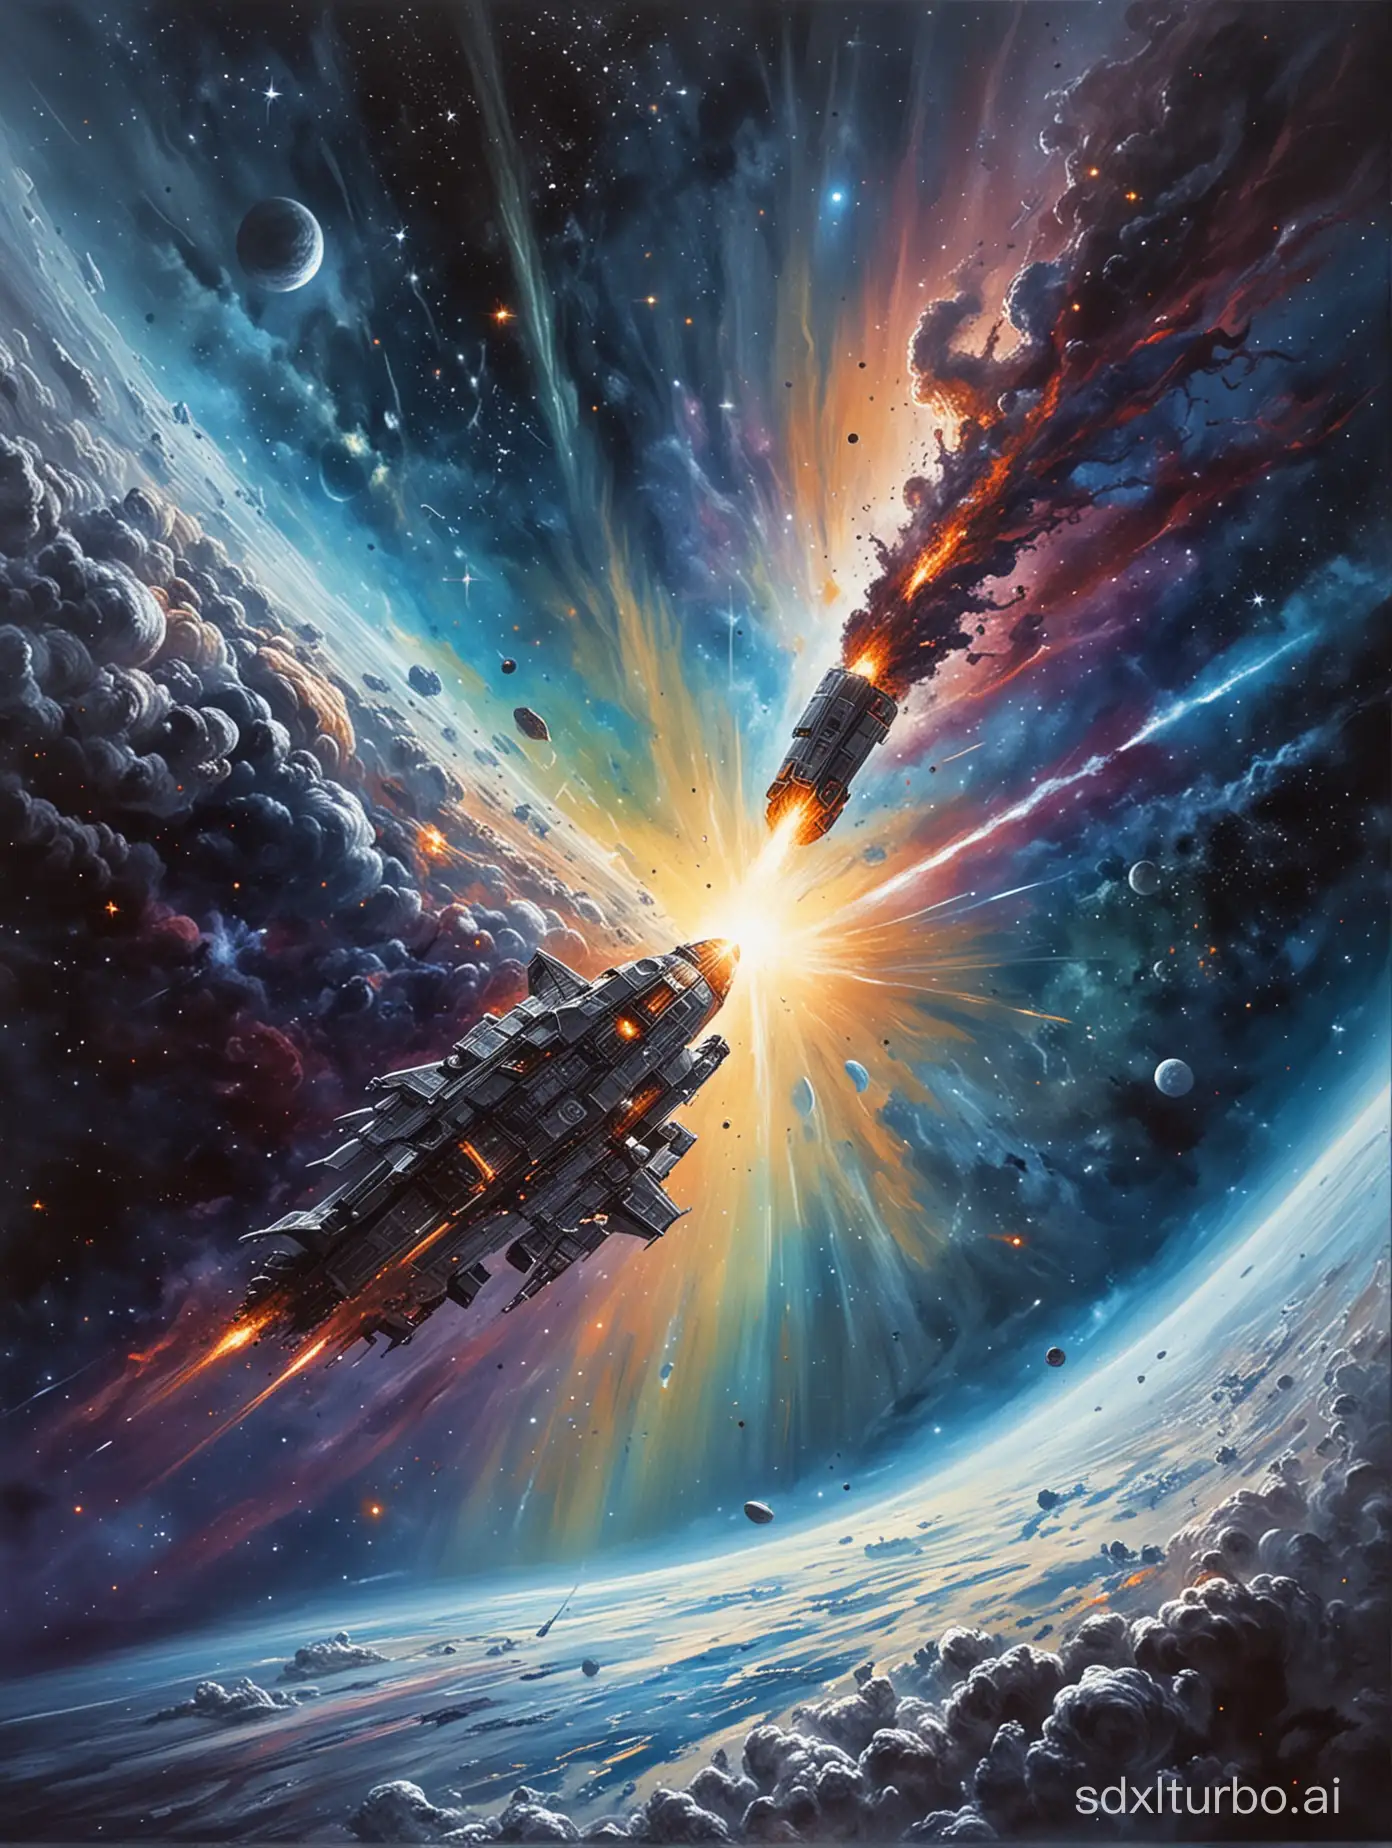 Epic-Space-Battle-Futuristic-SciFi-Artwork